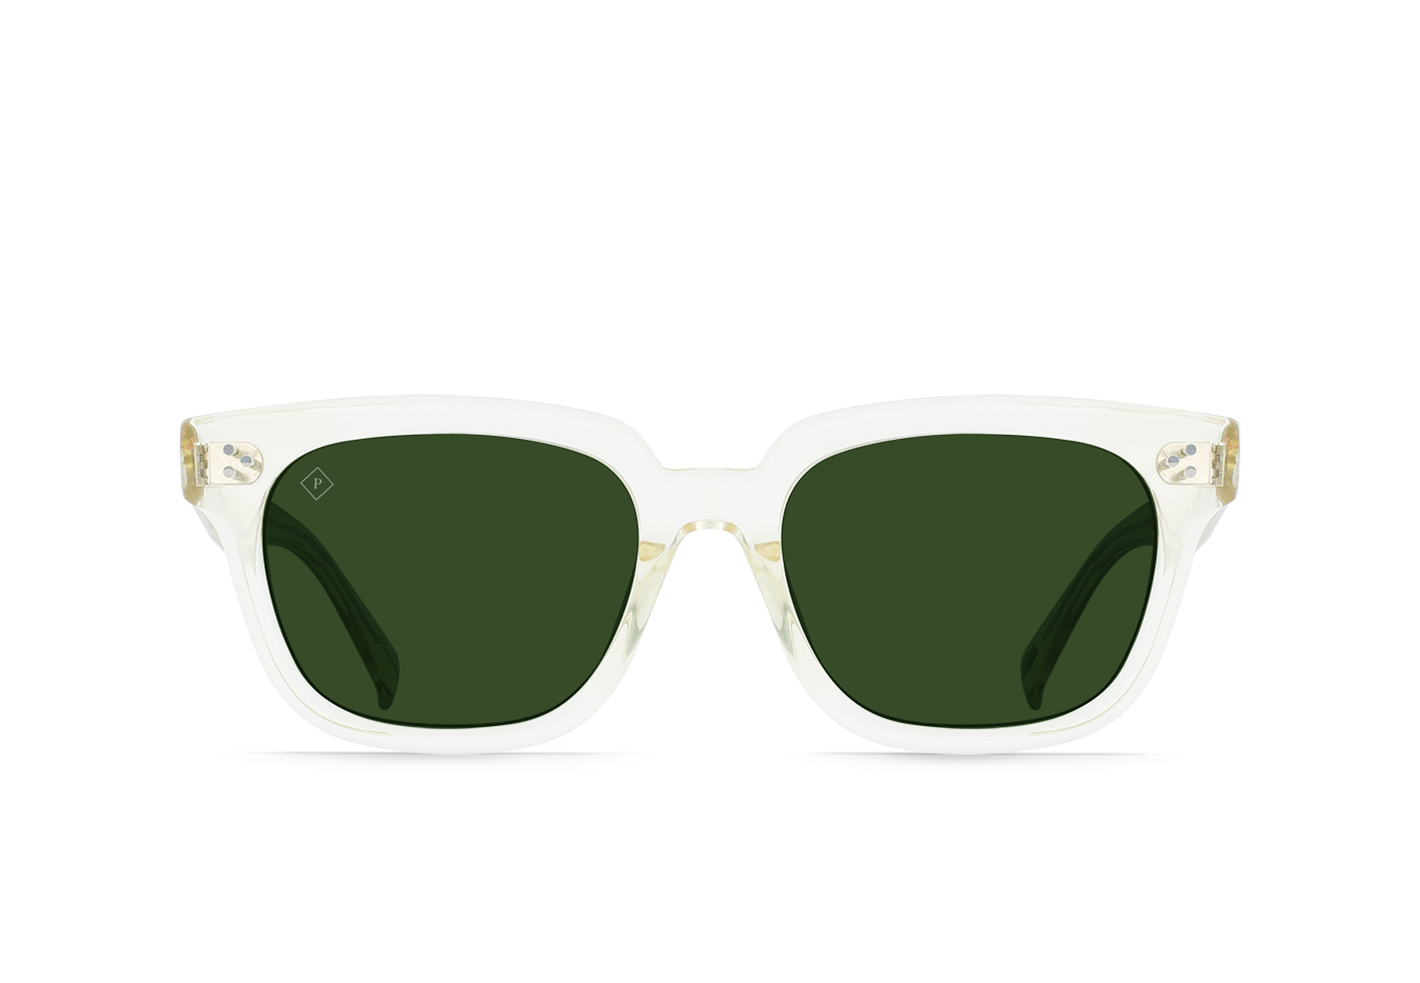 Raen Phonos - Burt Bottle Green 53 Sunglasses